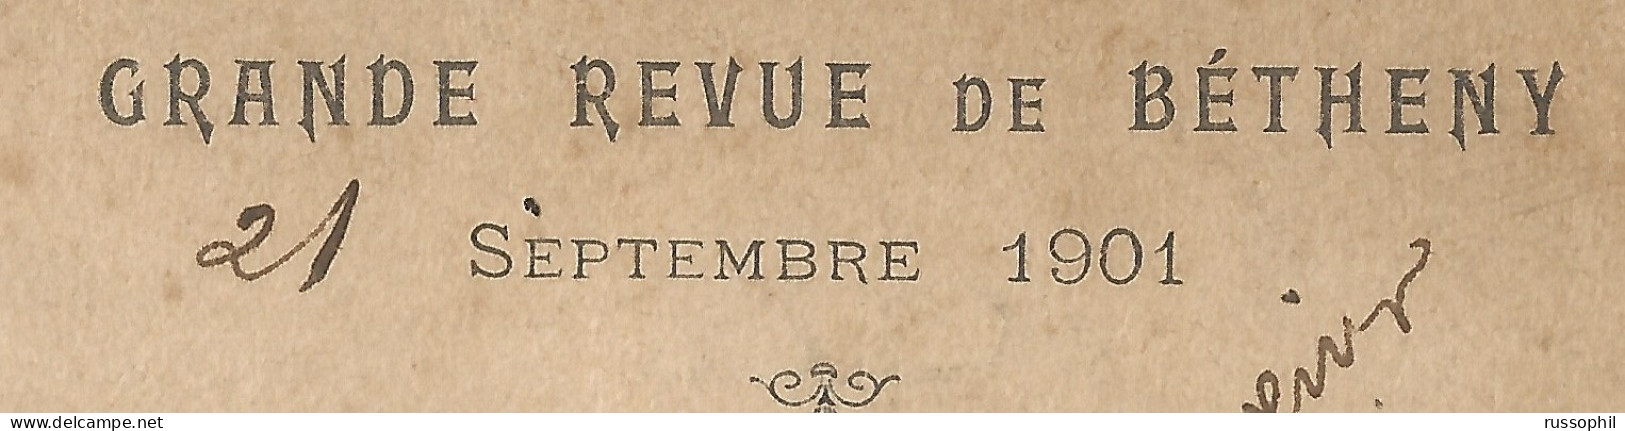 FRANCO RUSSIAN ALLIANCE - GRANDE REVUE DE BETHENY - 21 SEPTEMBRE 1901 - VUE DE BETHENY, PRES REIMS - 1901 - Events